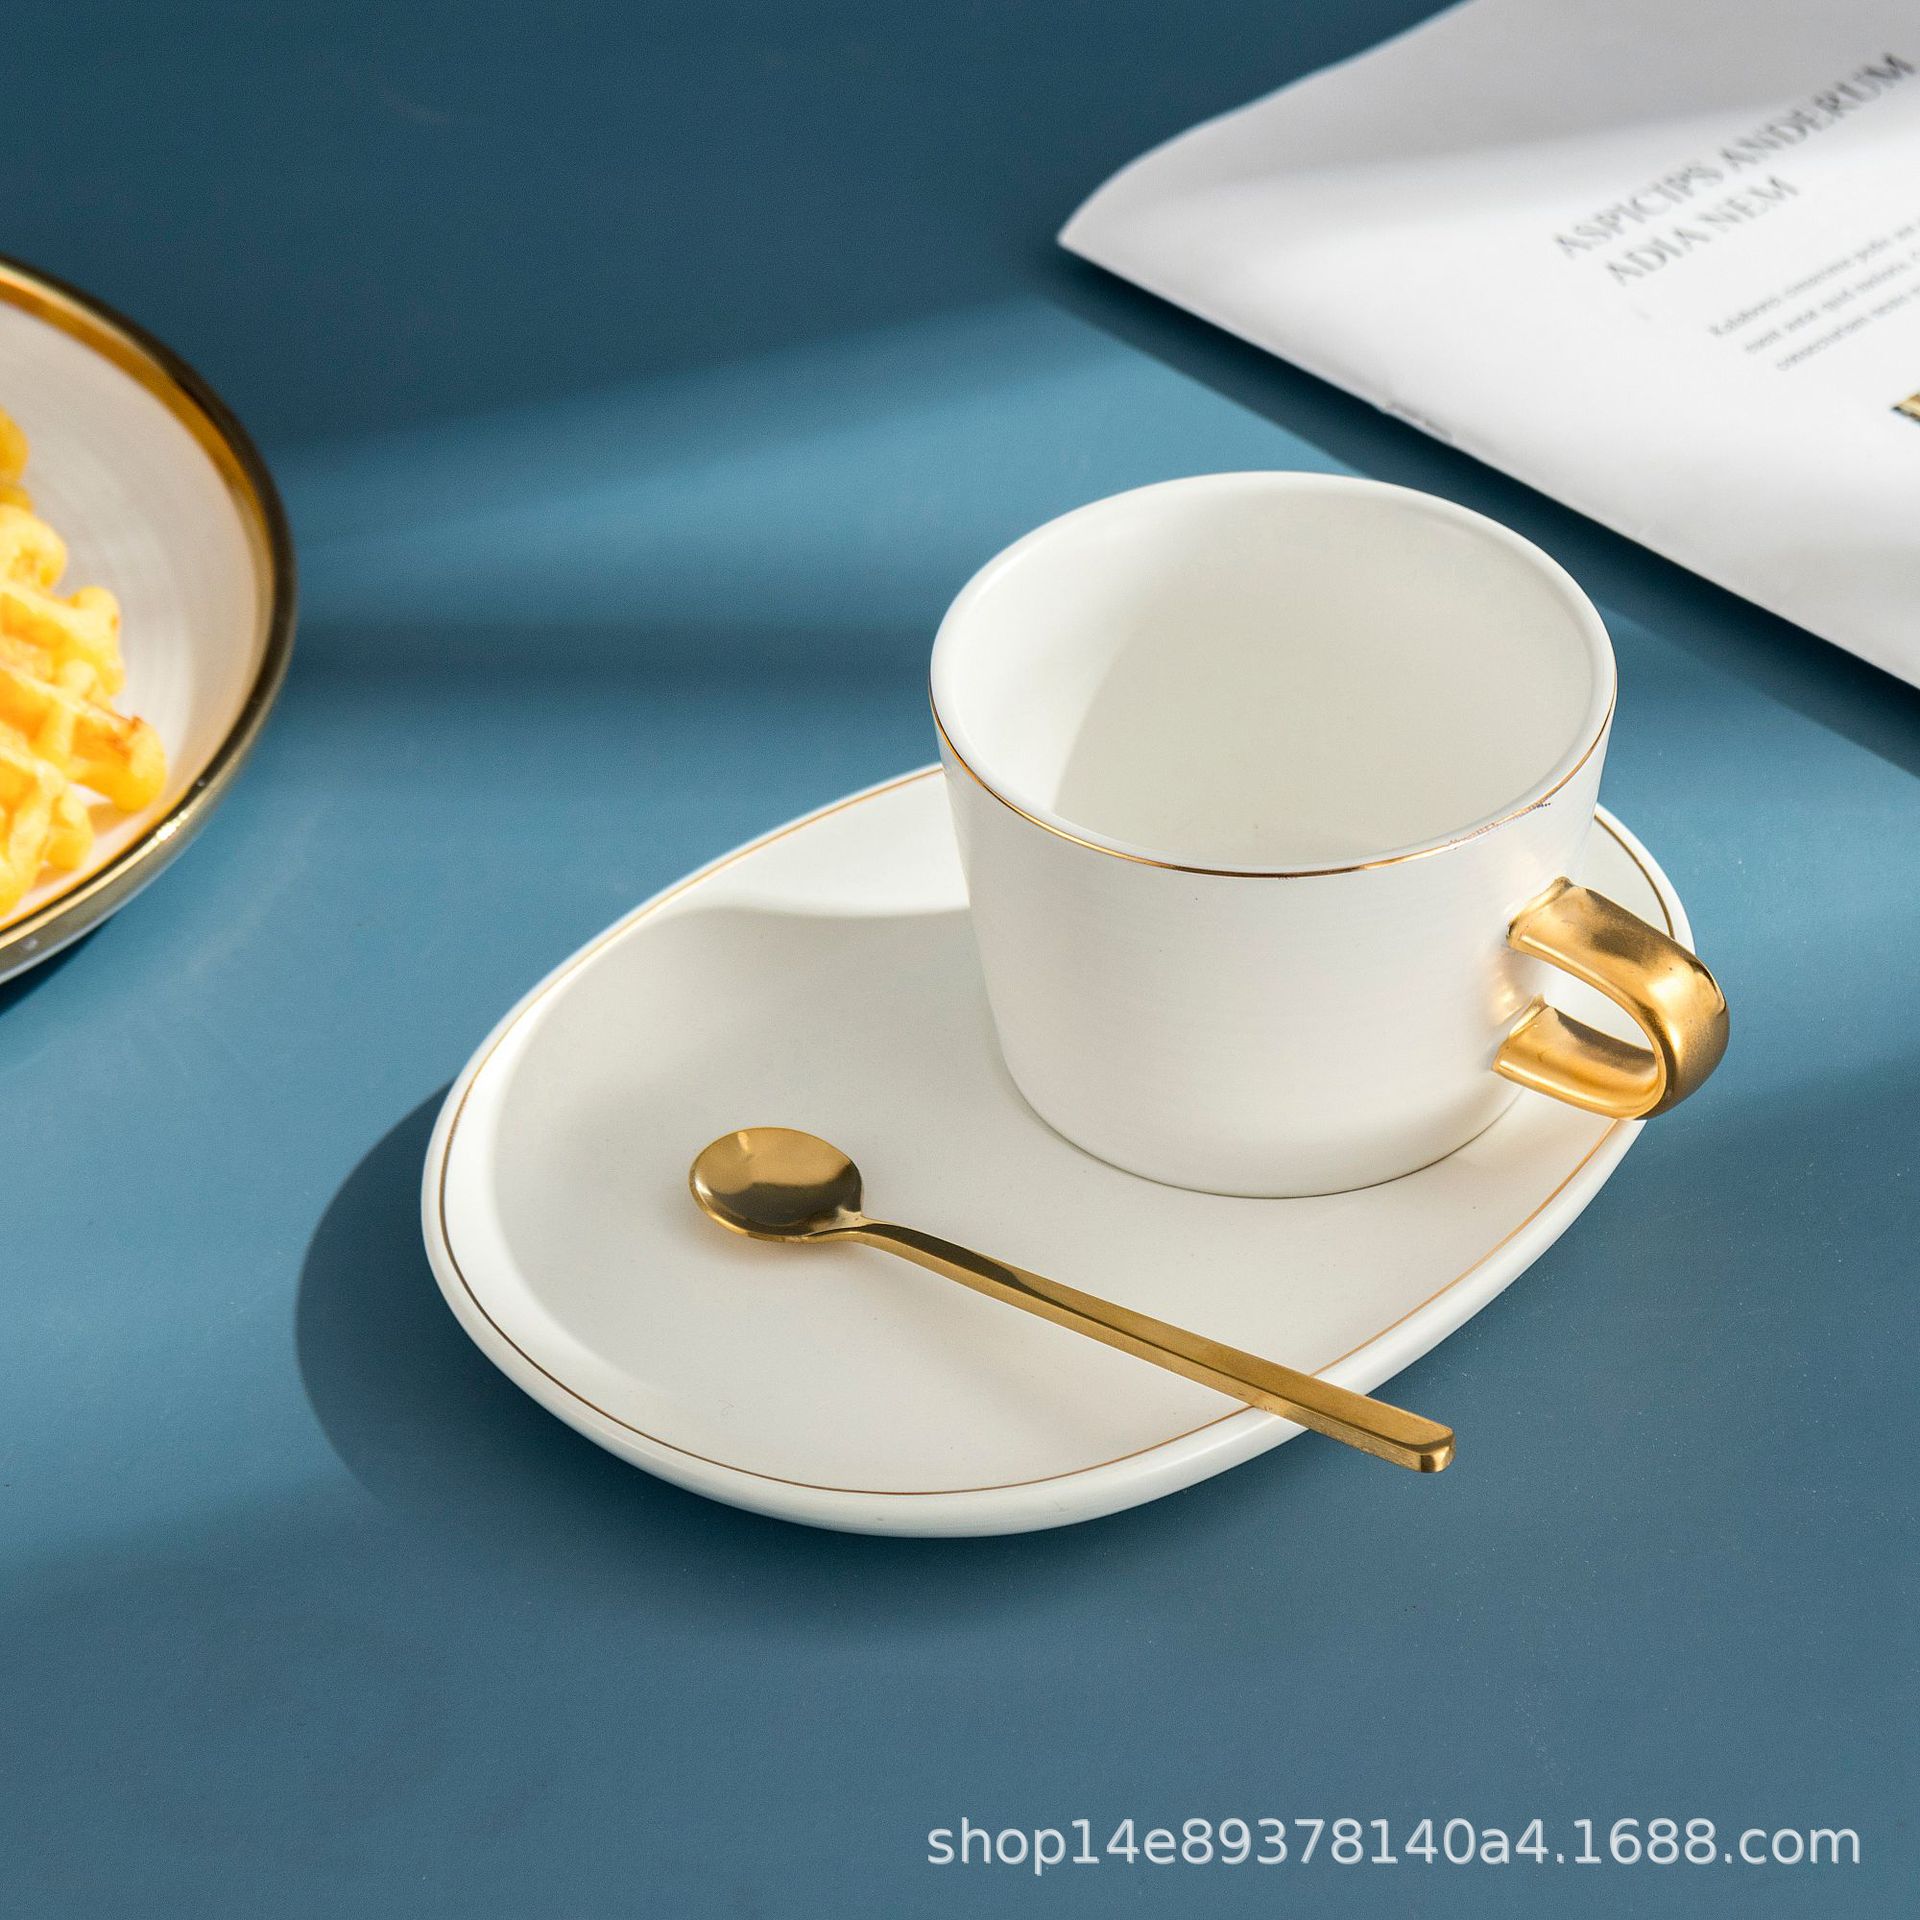 Cross-Border European-Style Good-looking Ceramic Cup & Saucer Set Business Meeting Mug Tableware Afternoon Tea Coffee Cup Wholesale